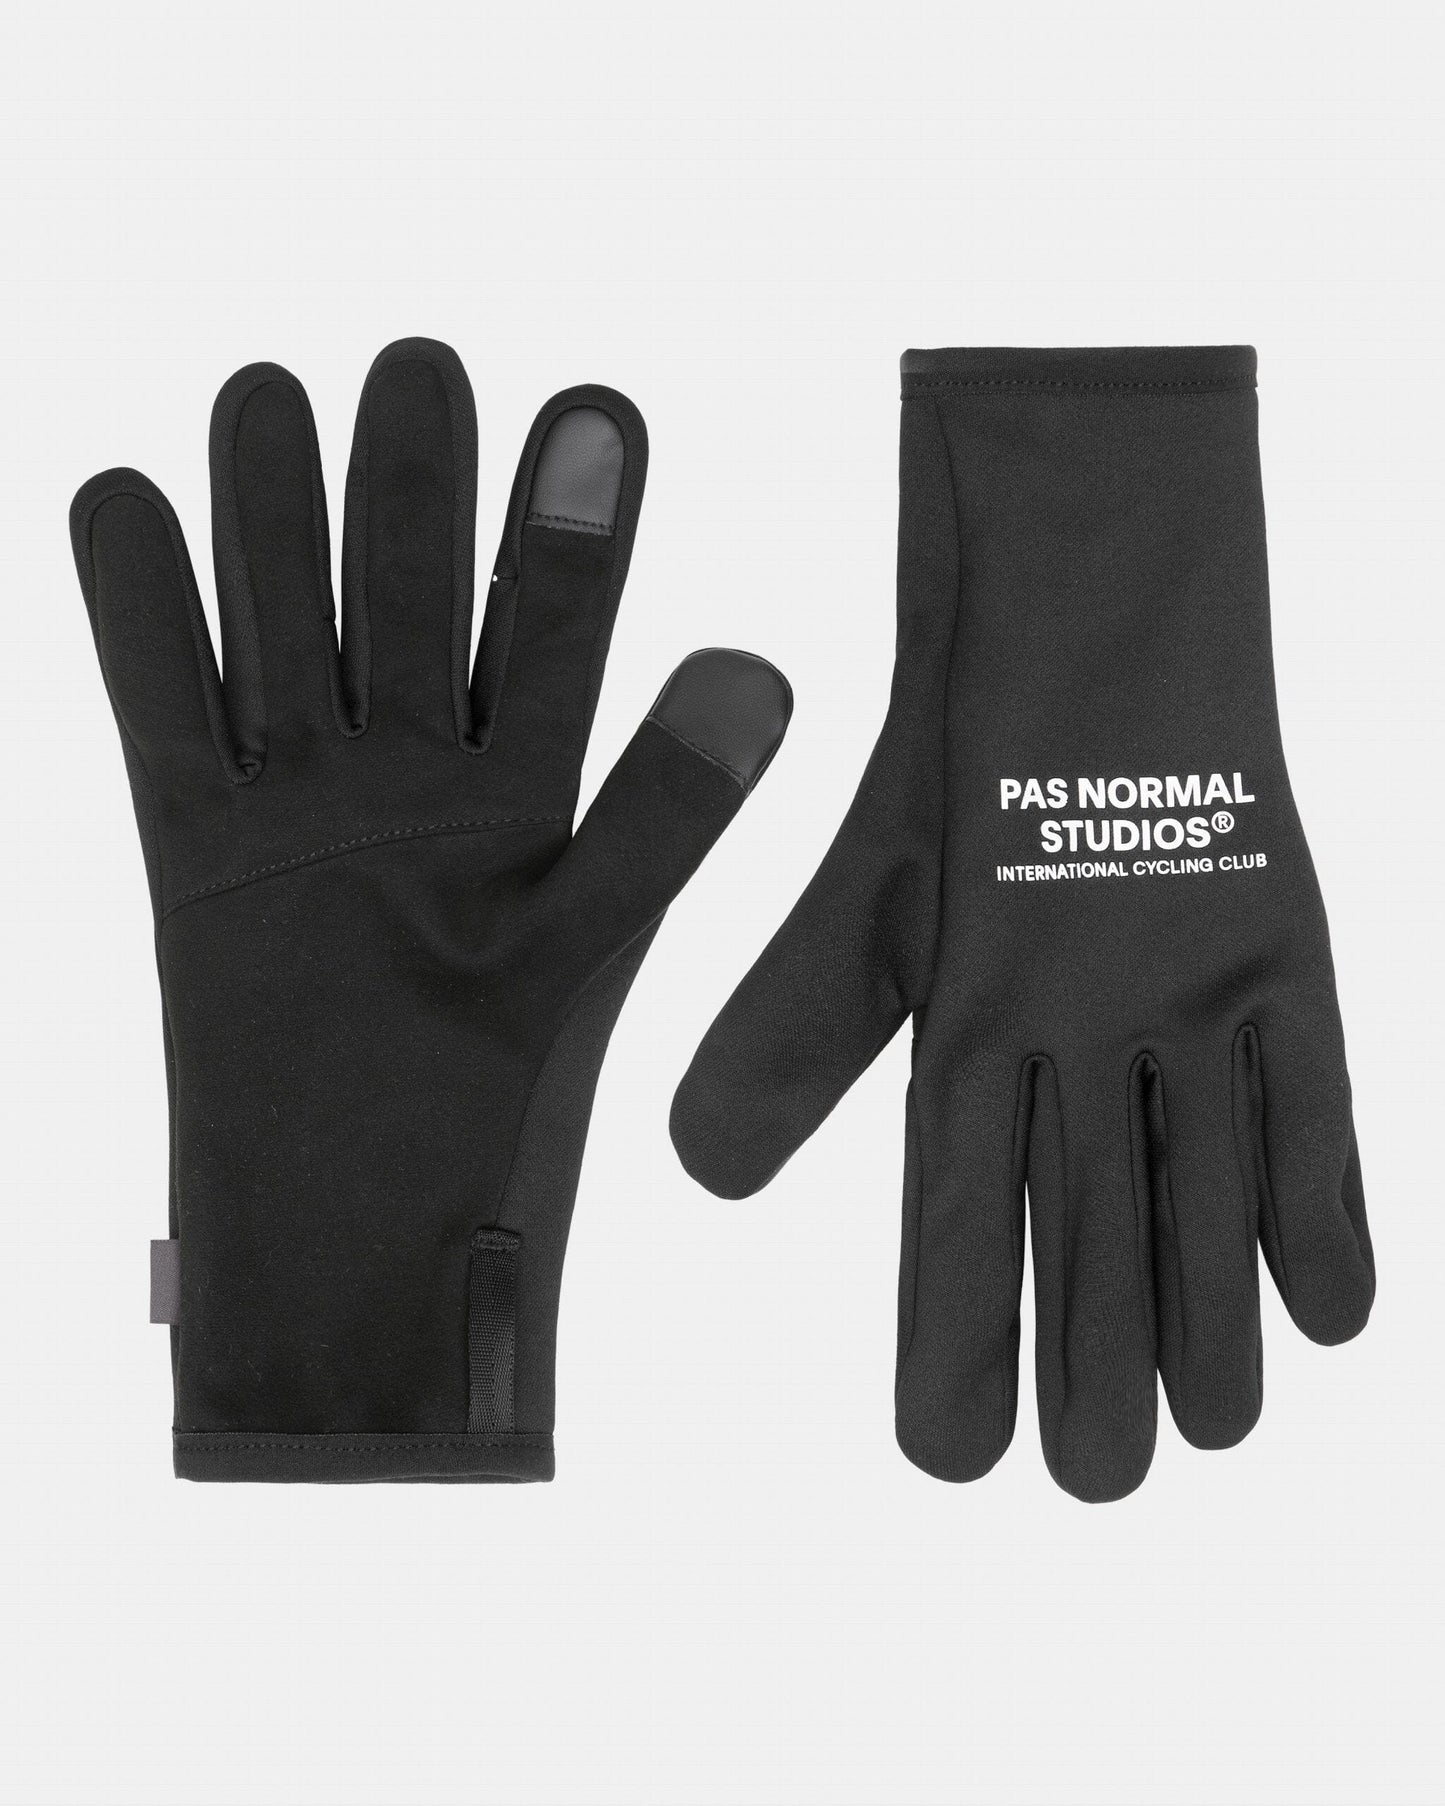 Pas Normal Studios - Transition Gloves Gloves Pas Normal Studios 